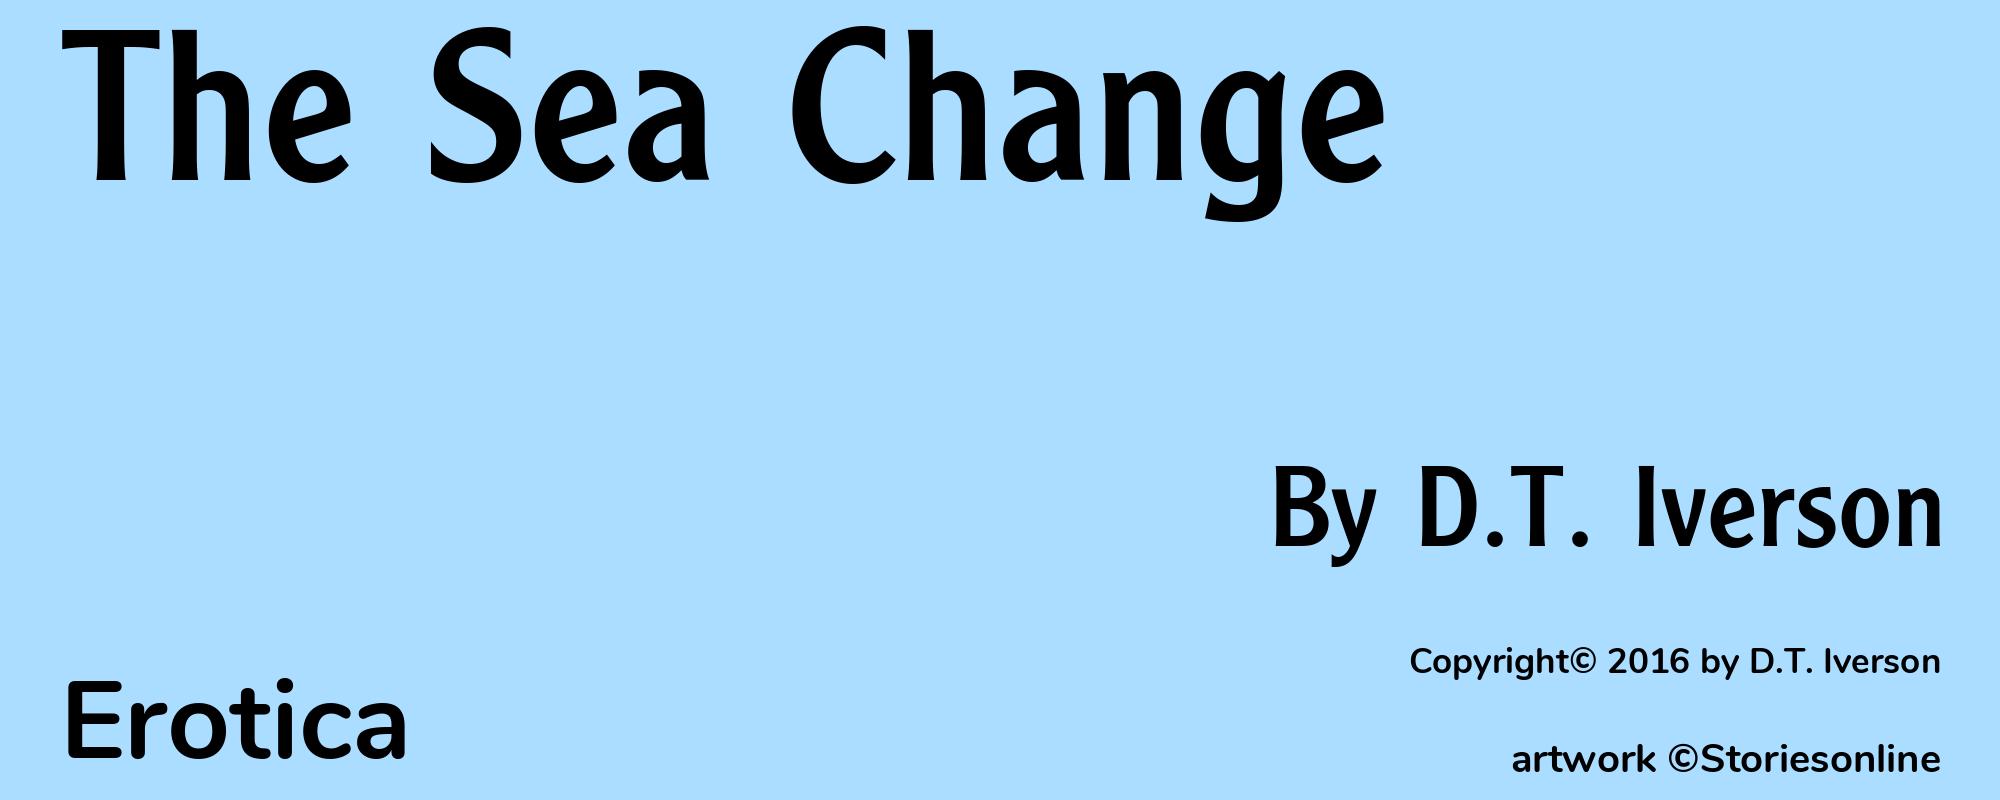 The Sea Change - Cover